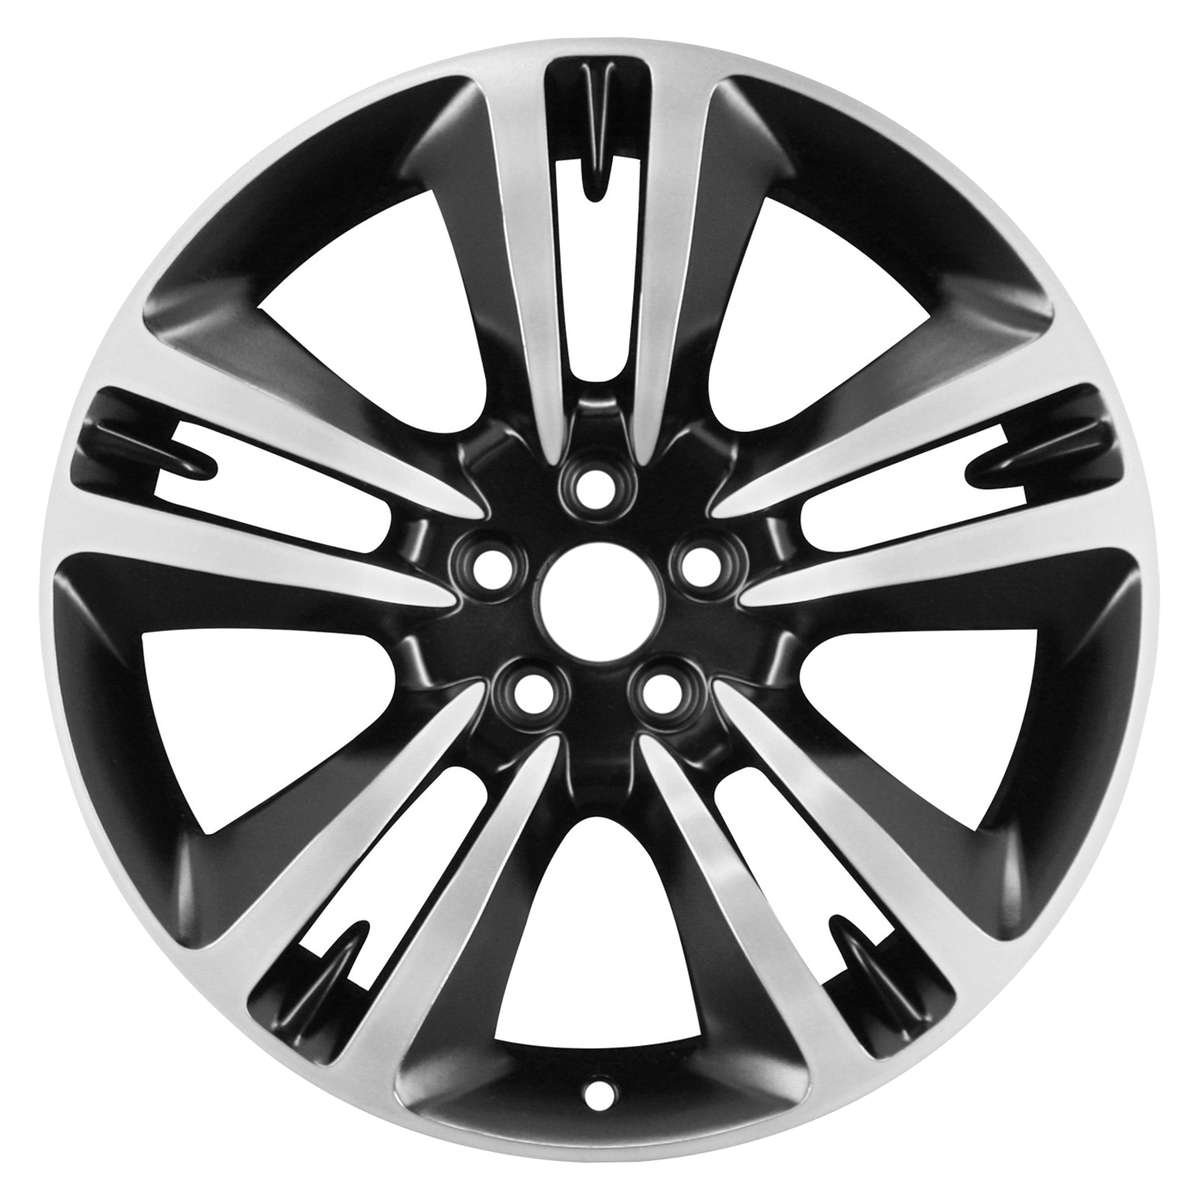 2014 Dodge Charger 20" OEM Wheel Rim W2507PB